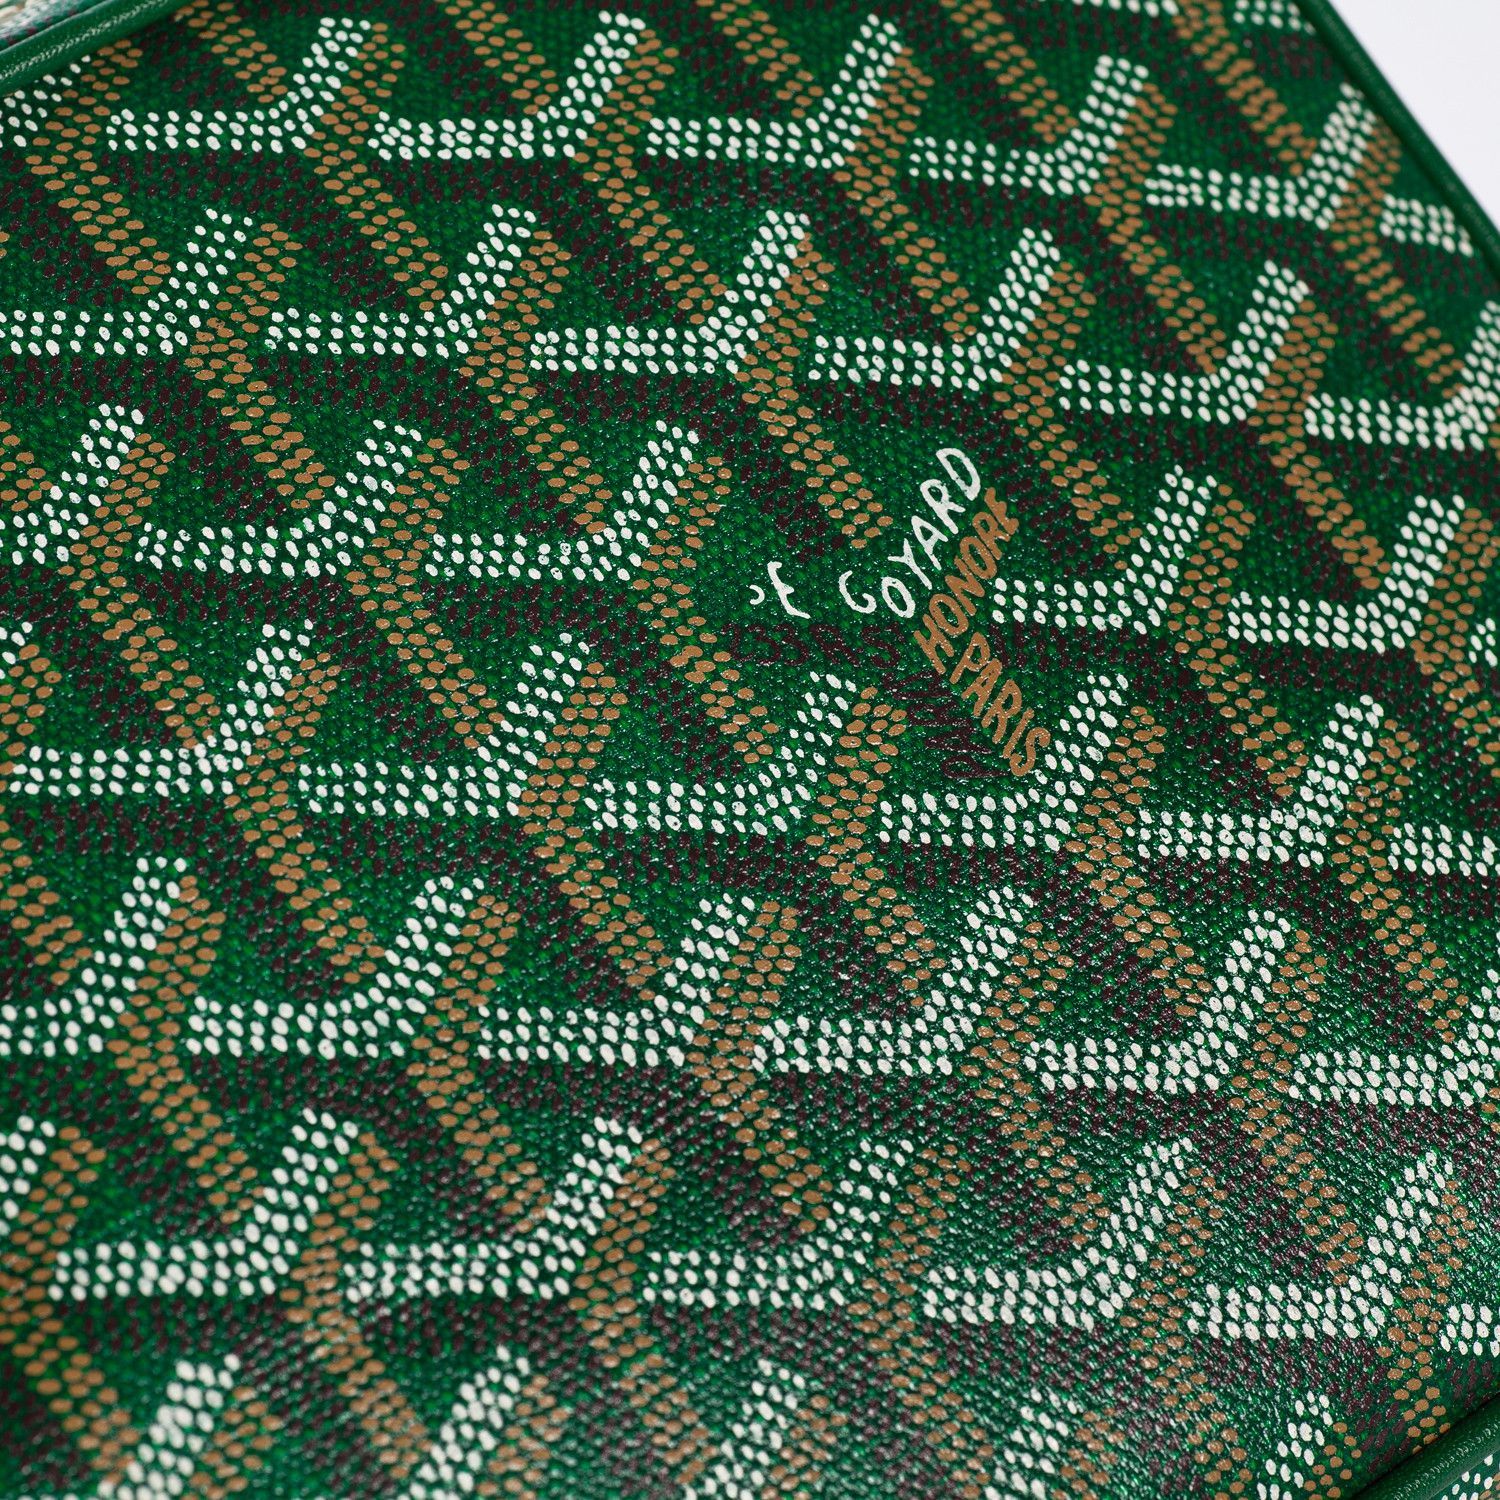 Green Goyard Pattern - Tap to see more goyard wallpapers